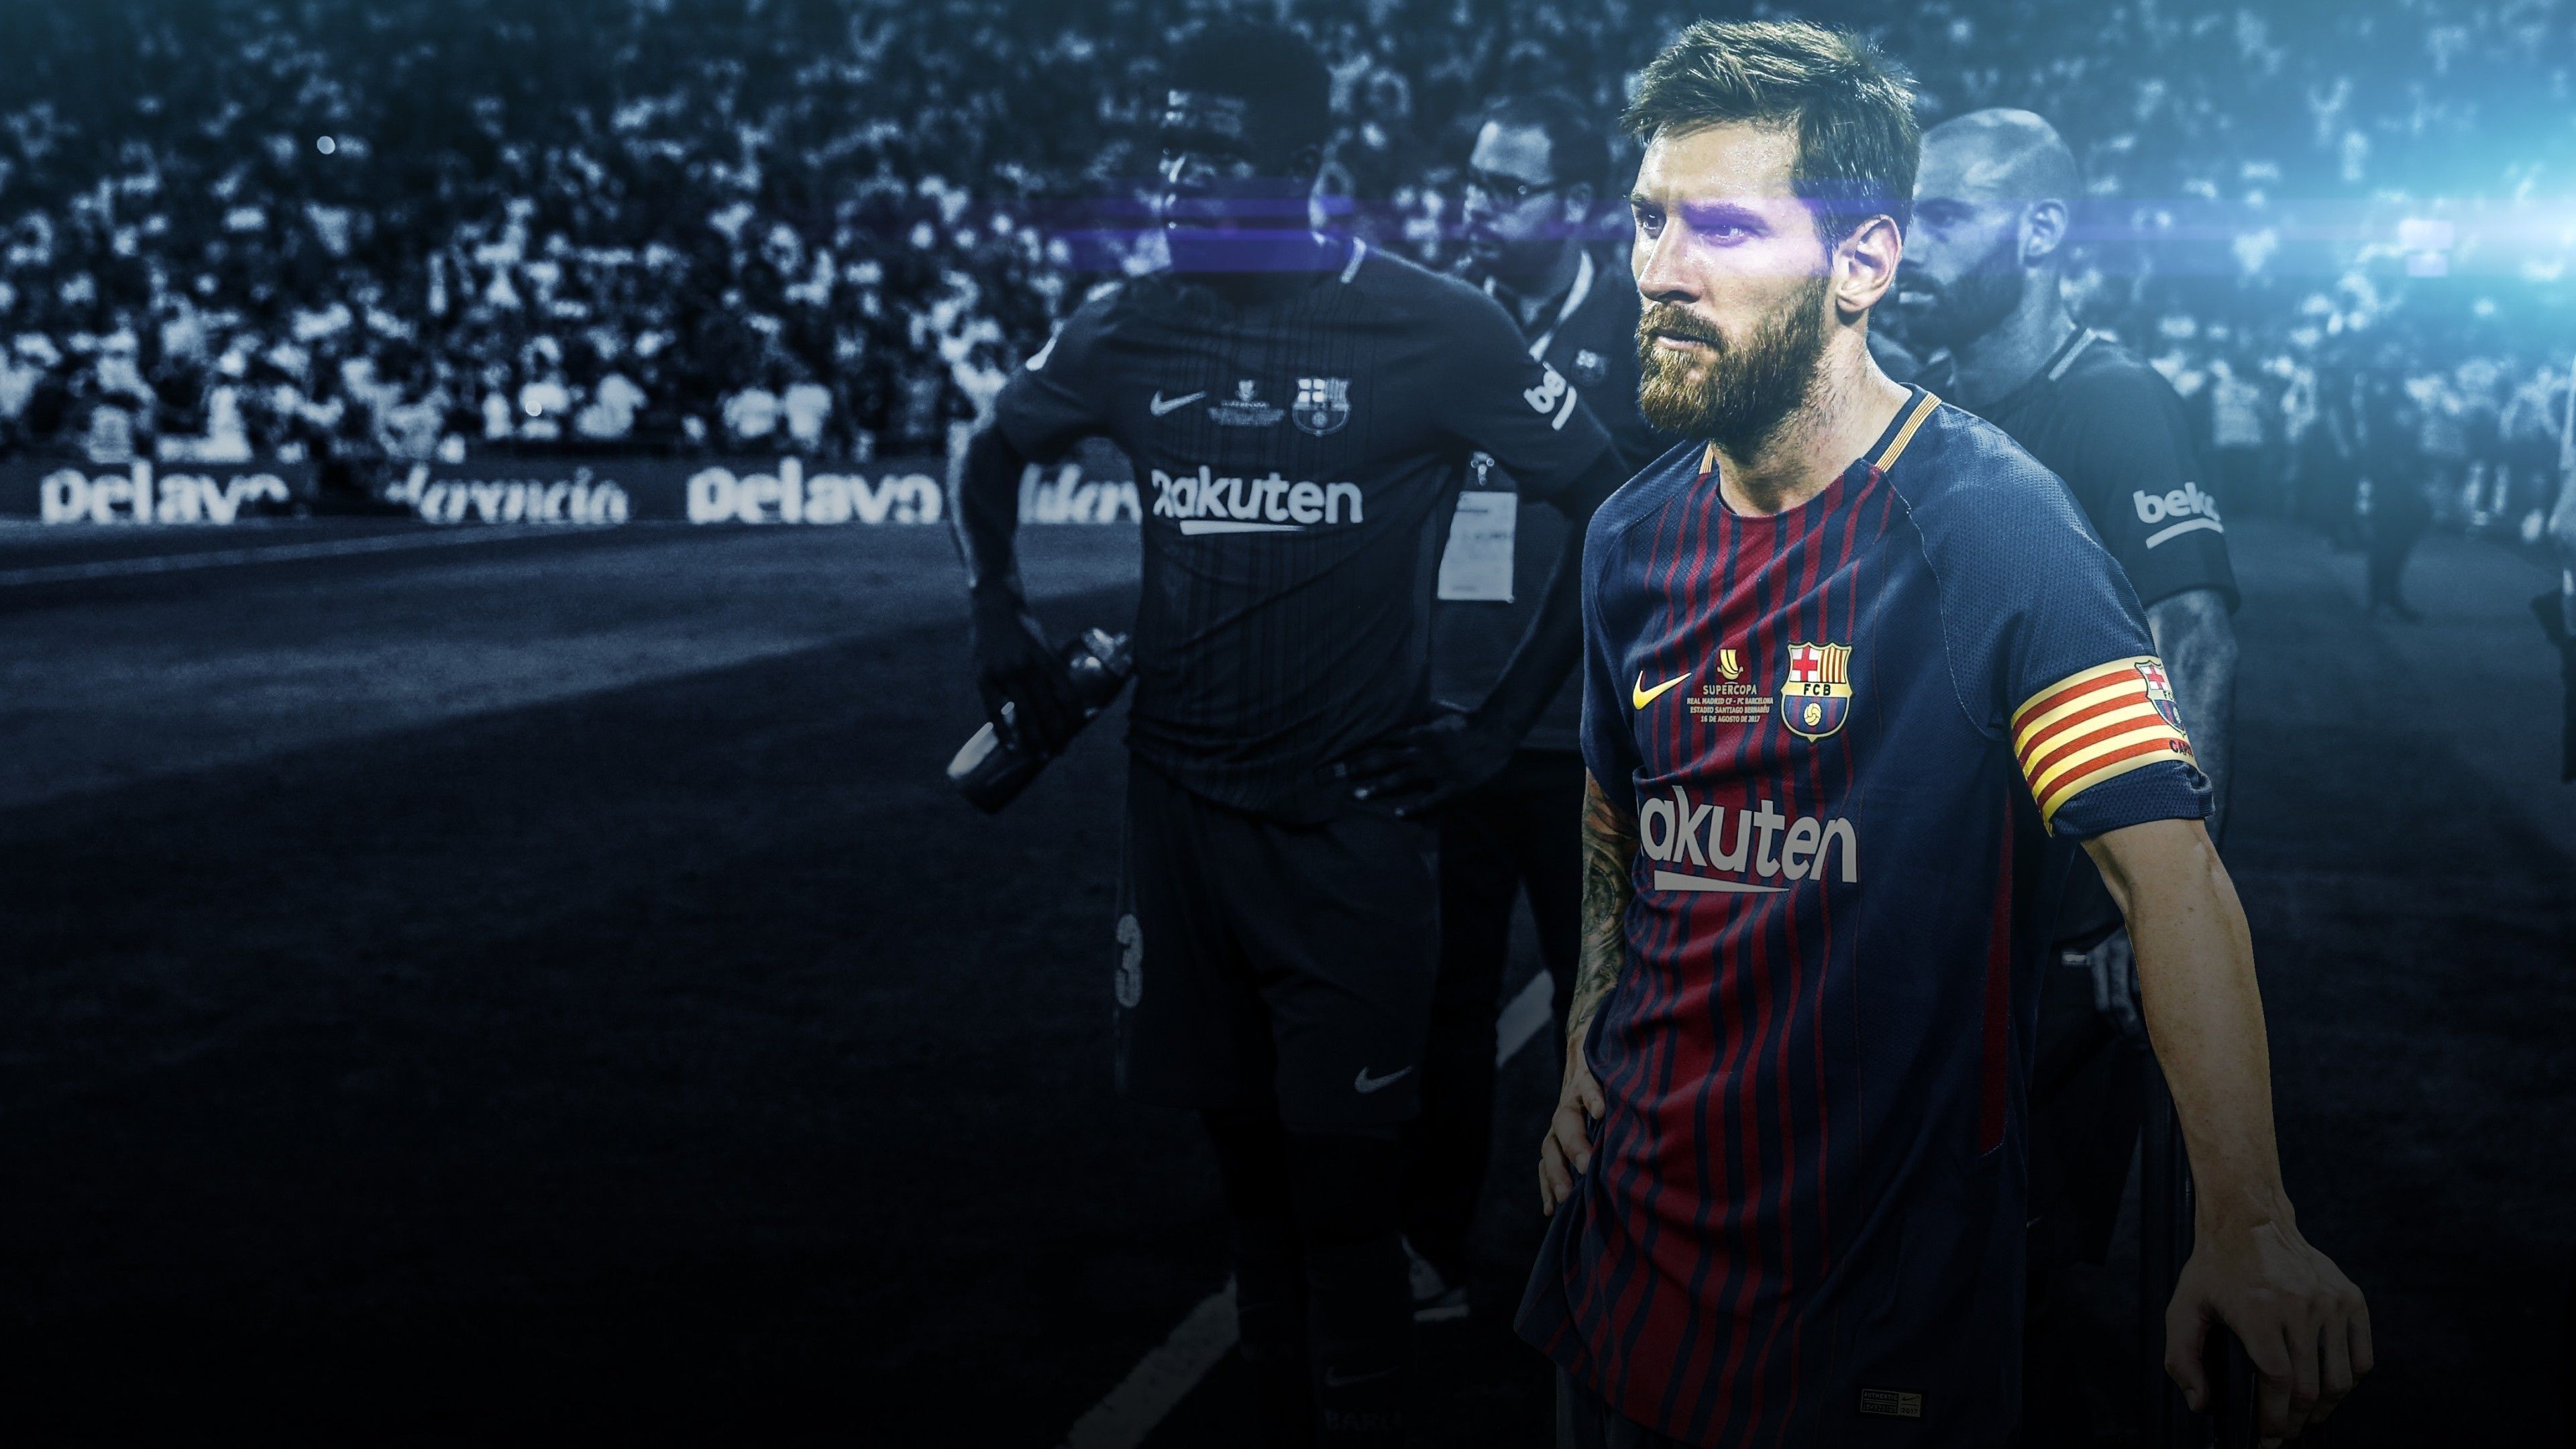 Messi Background 2018